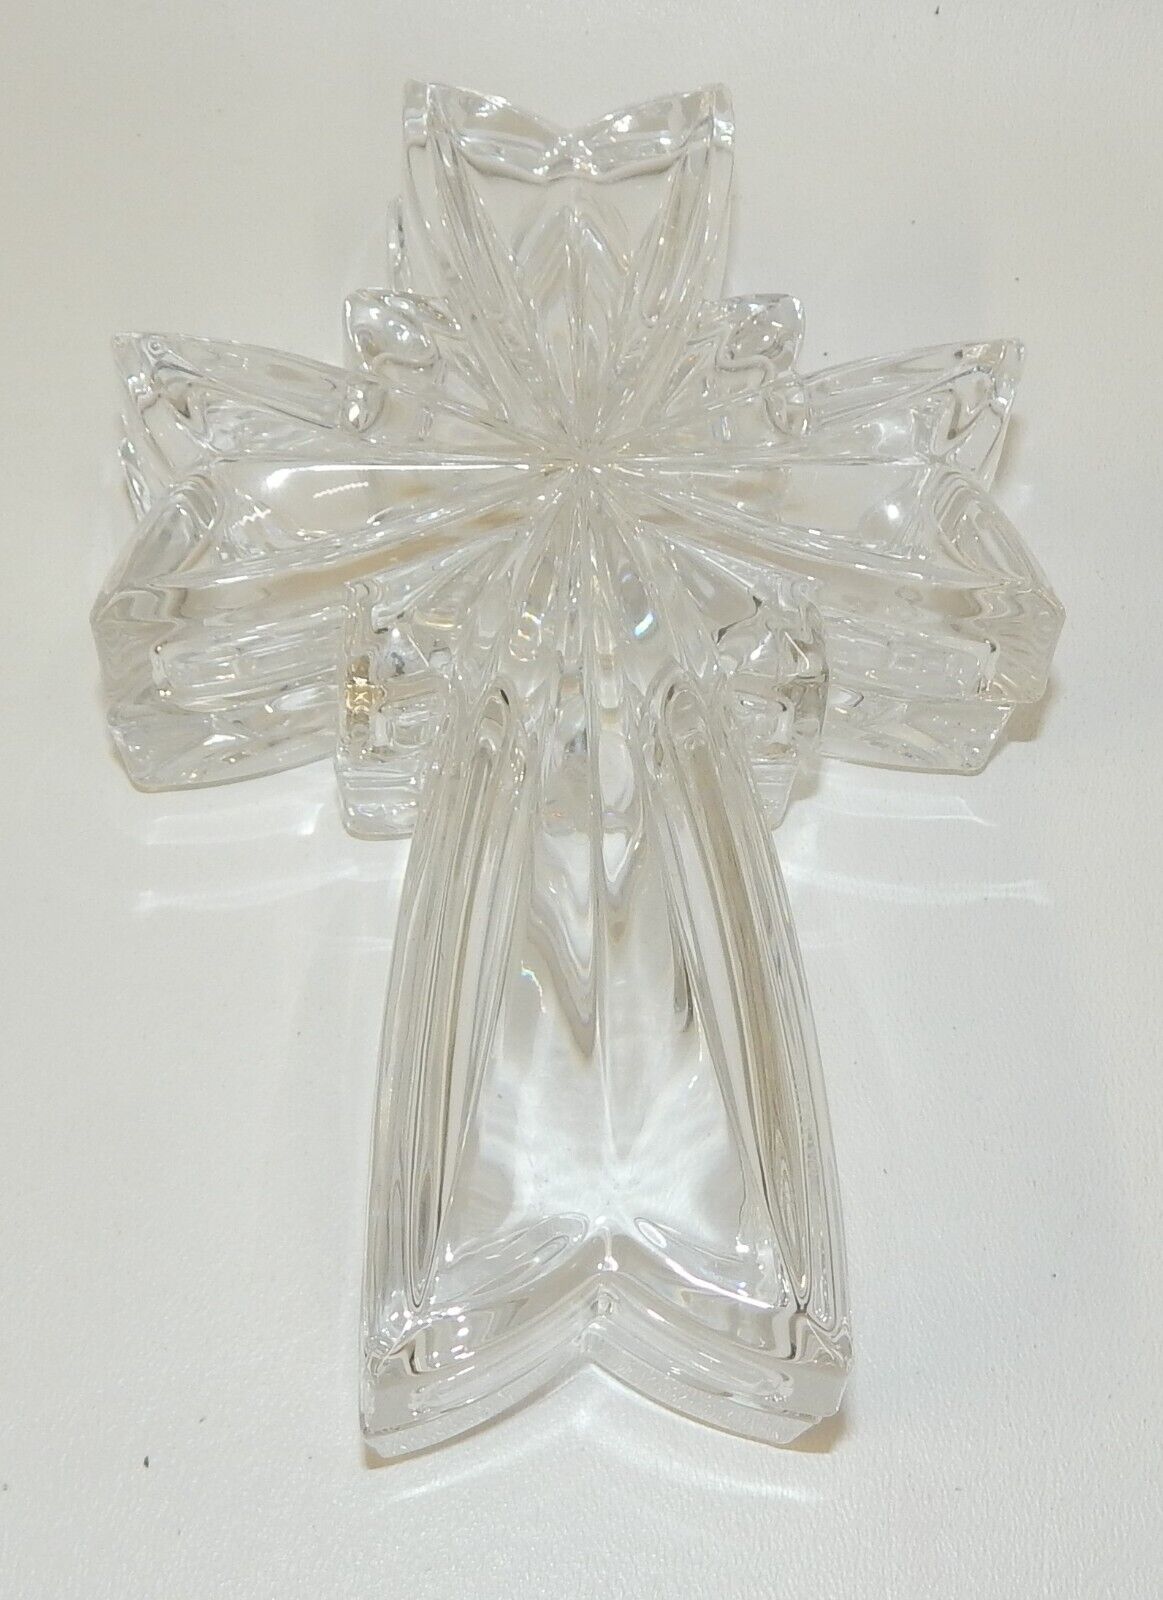 Stunning Waterford Crystal Lidded Cross Jewelry Trinket Box